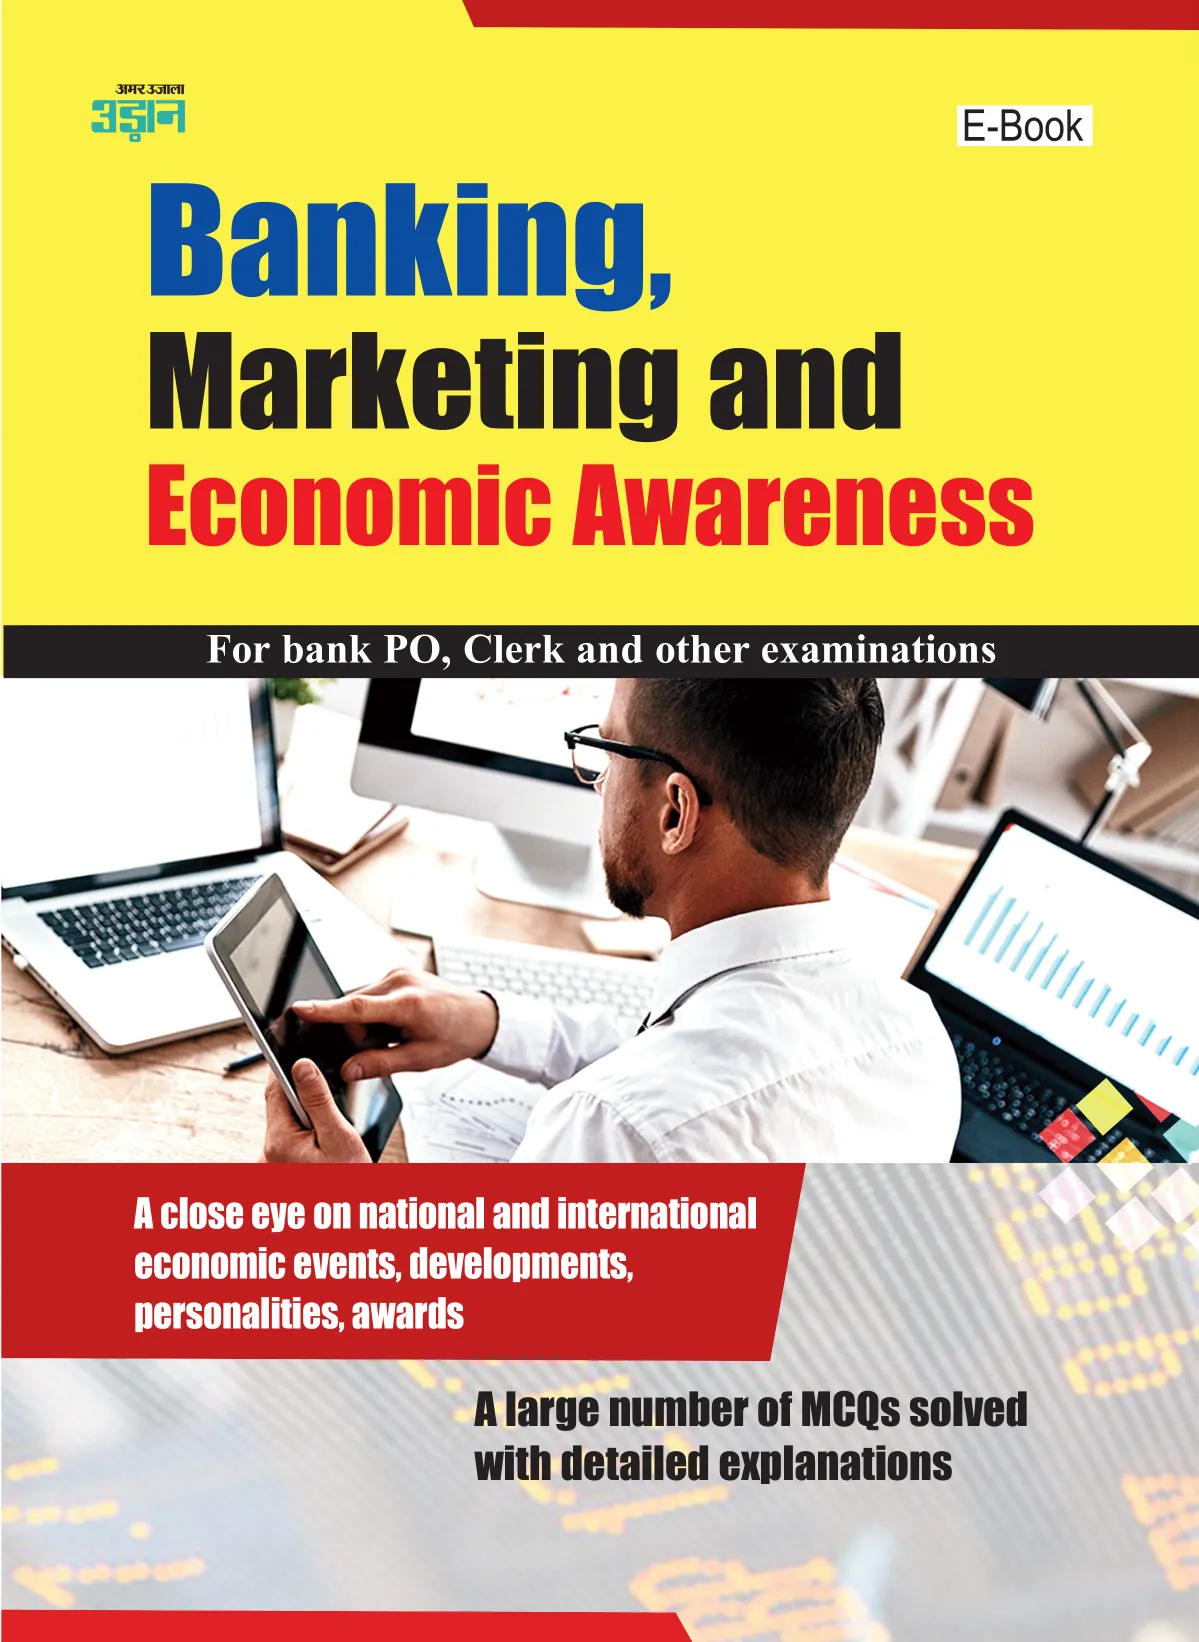 E-BOOK COVER-BANKING